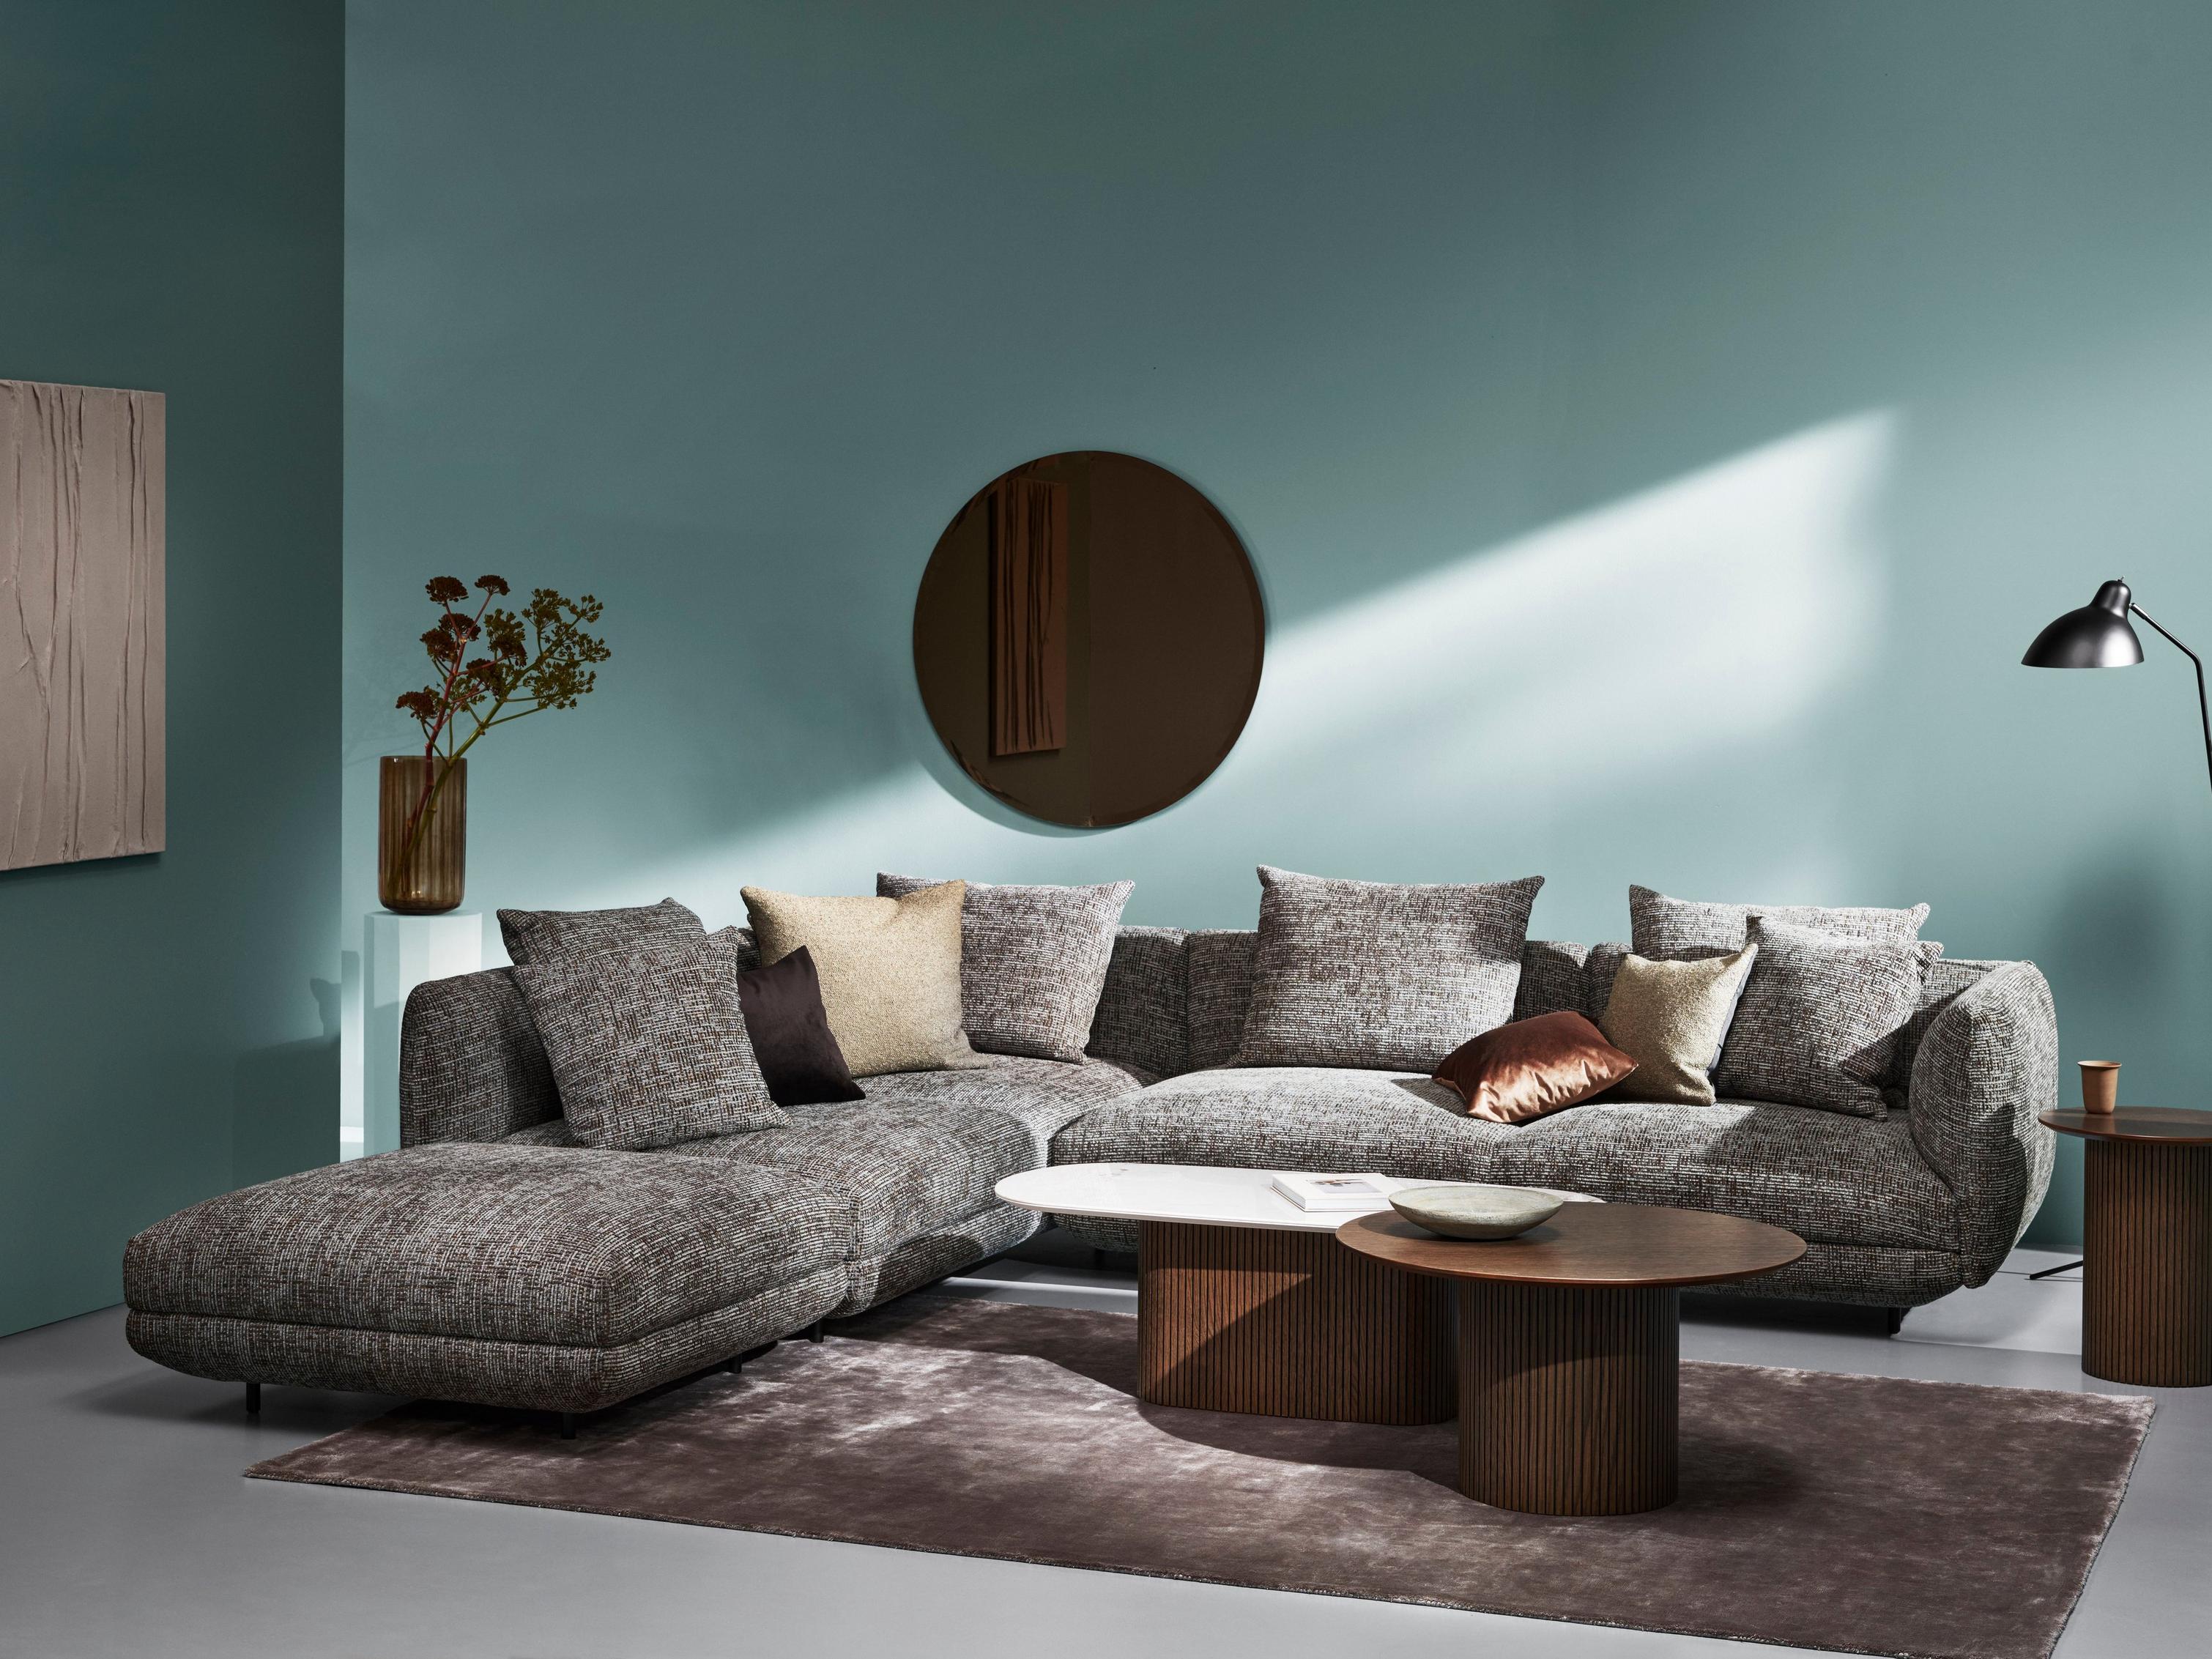 An inviting living space featuring the Salamanca corner sofa